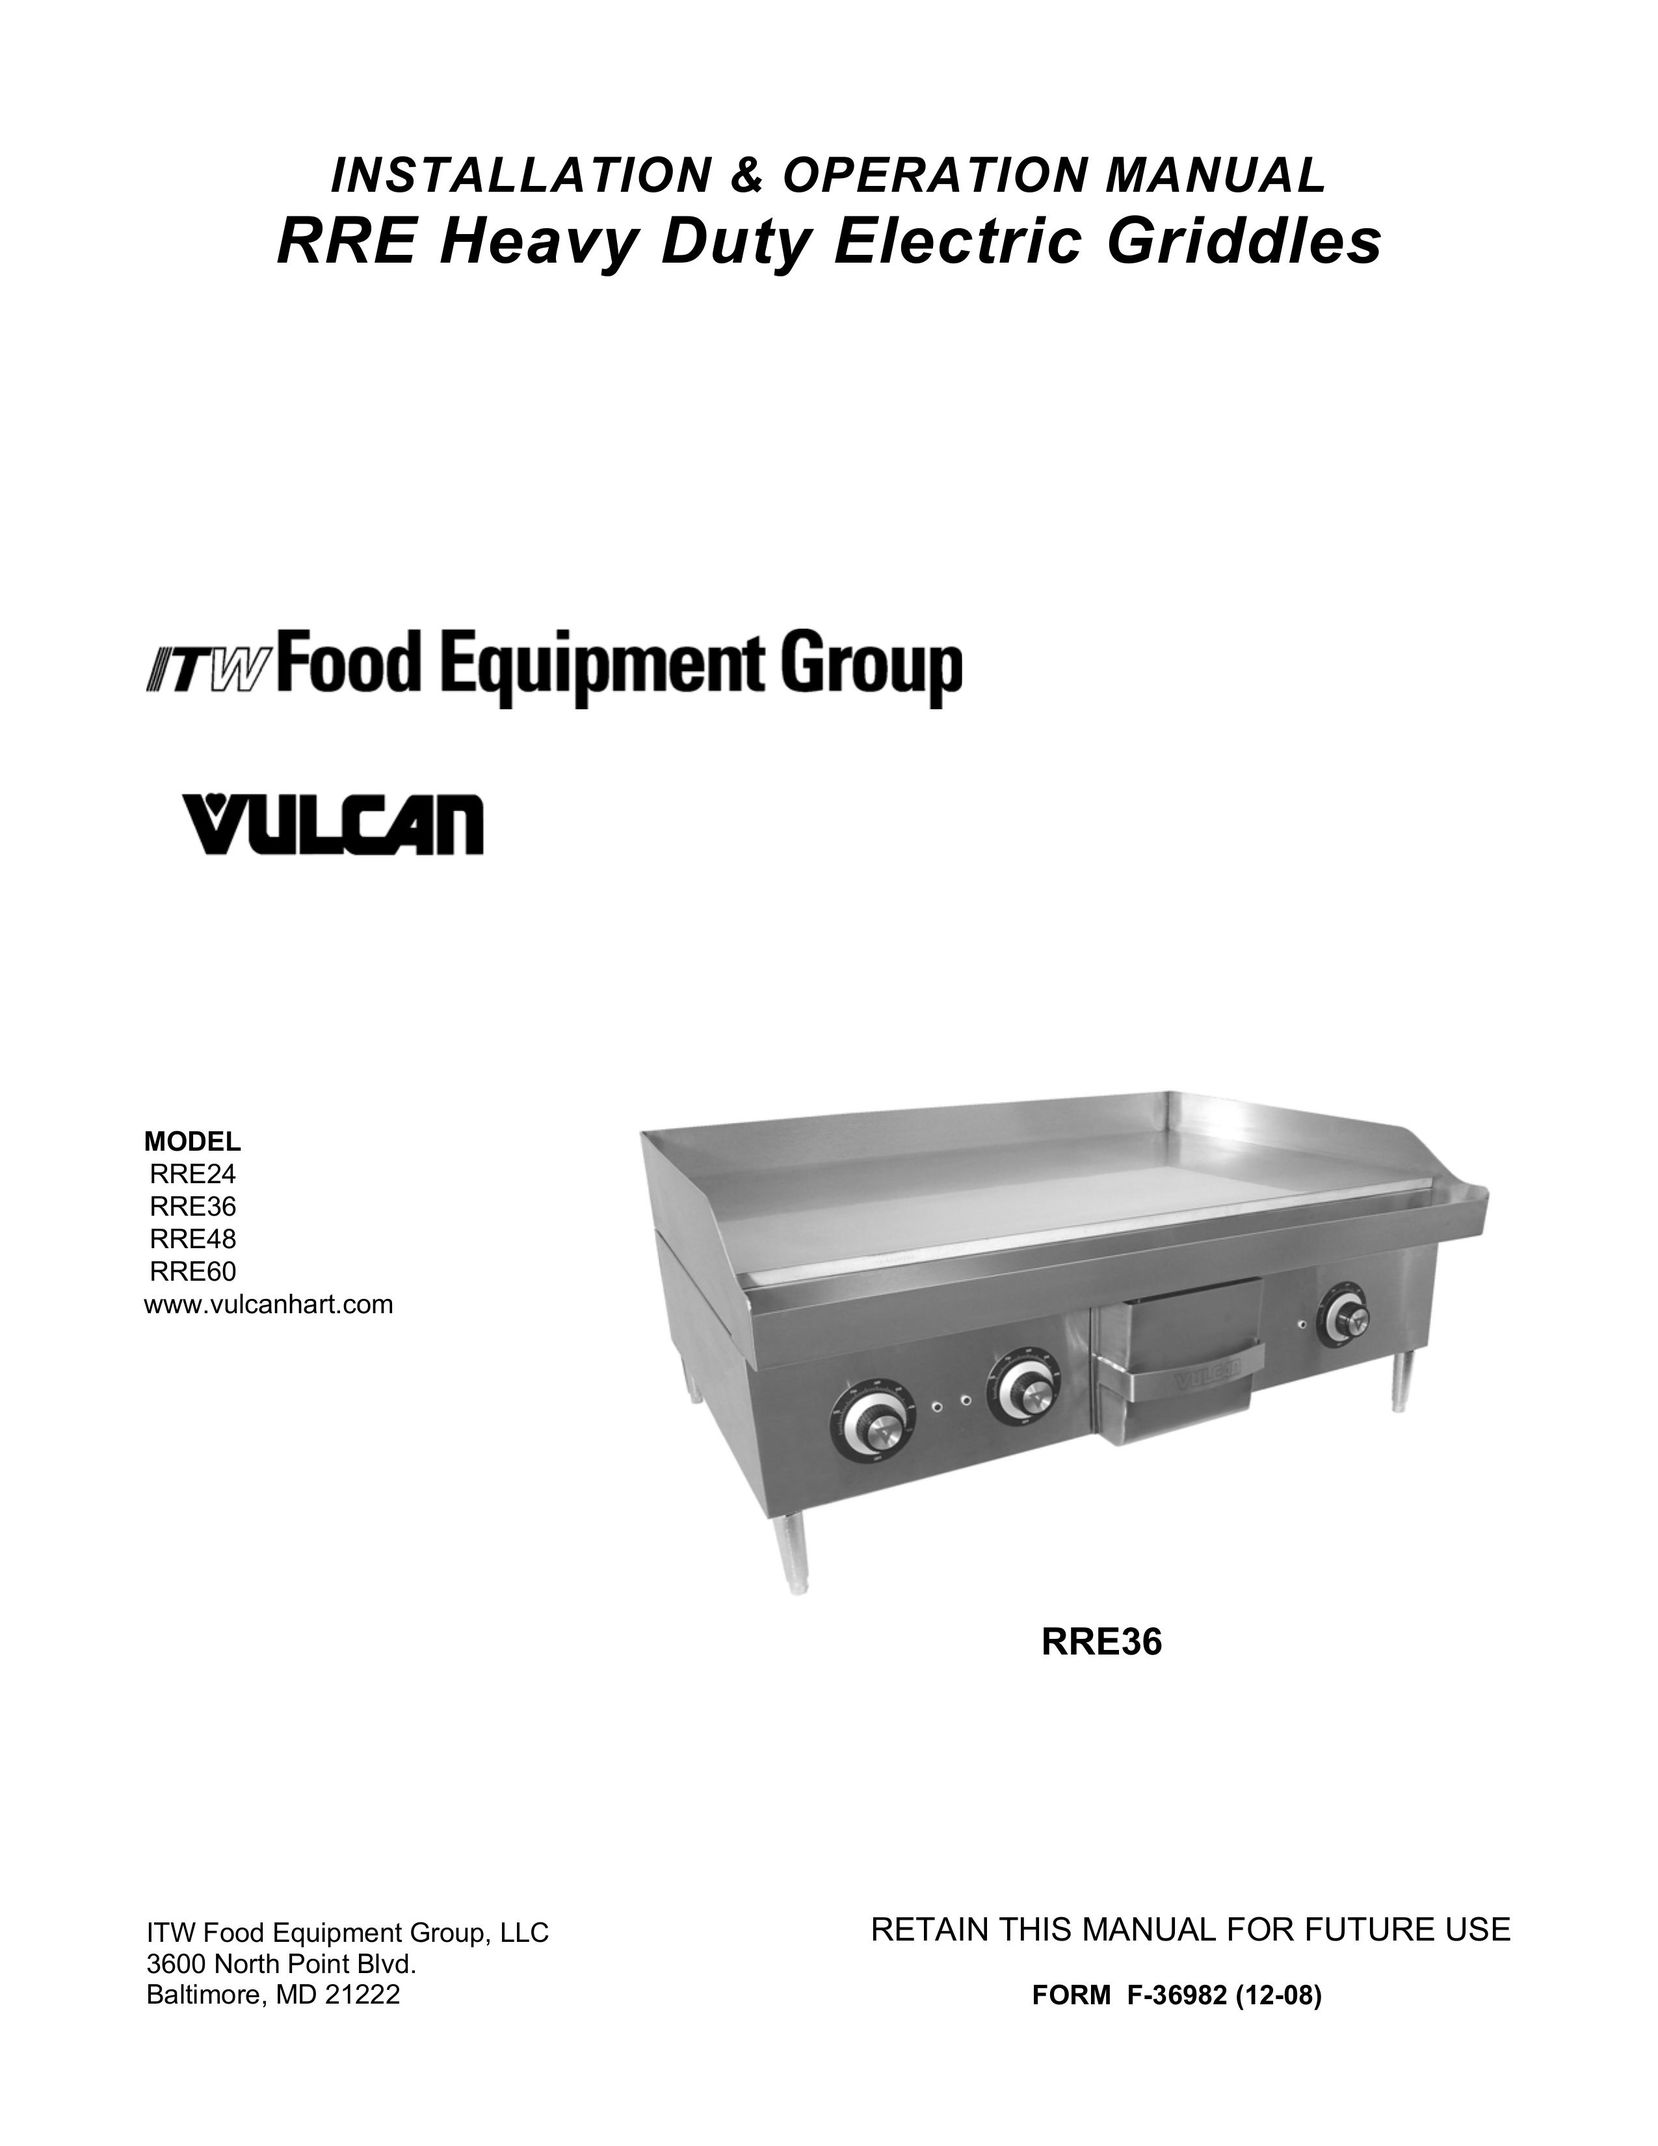 Vulcan-Hart RRE60 Kitchen Grill User Manual